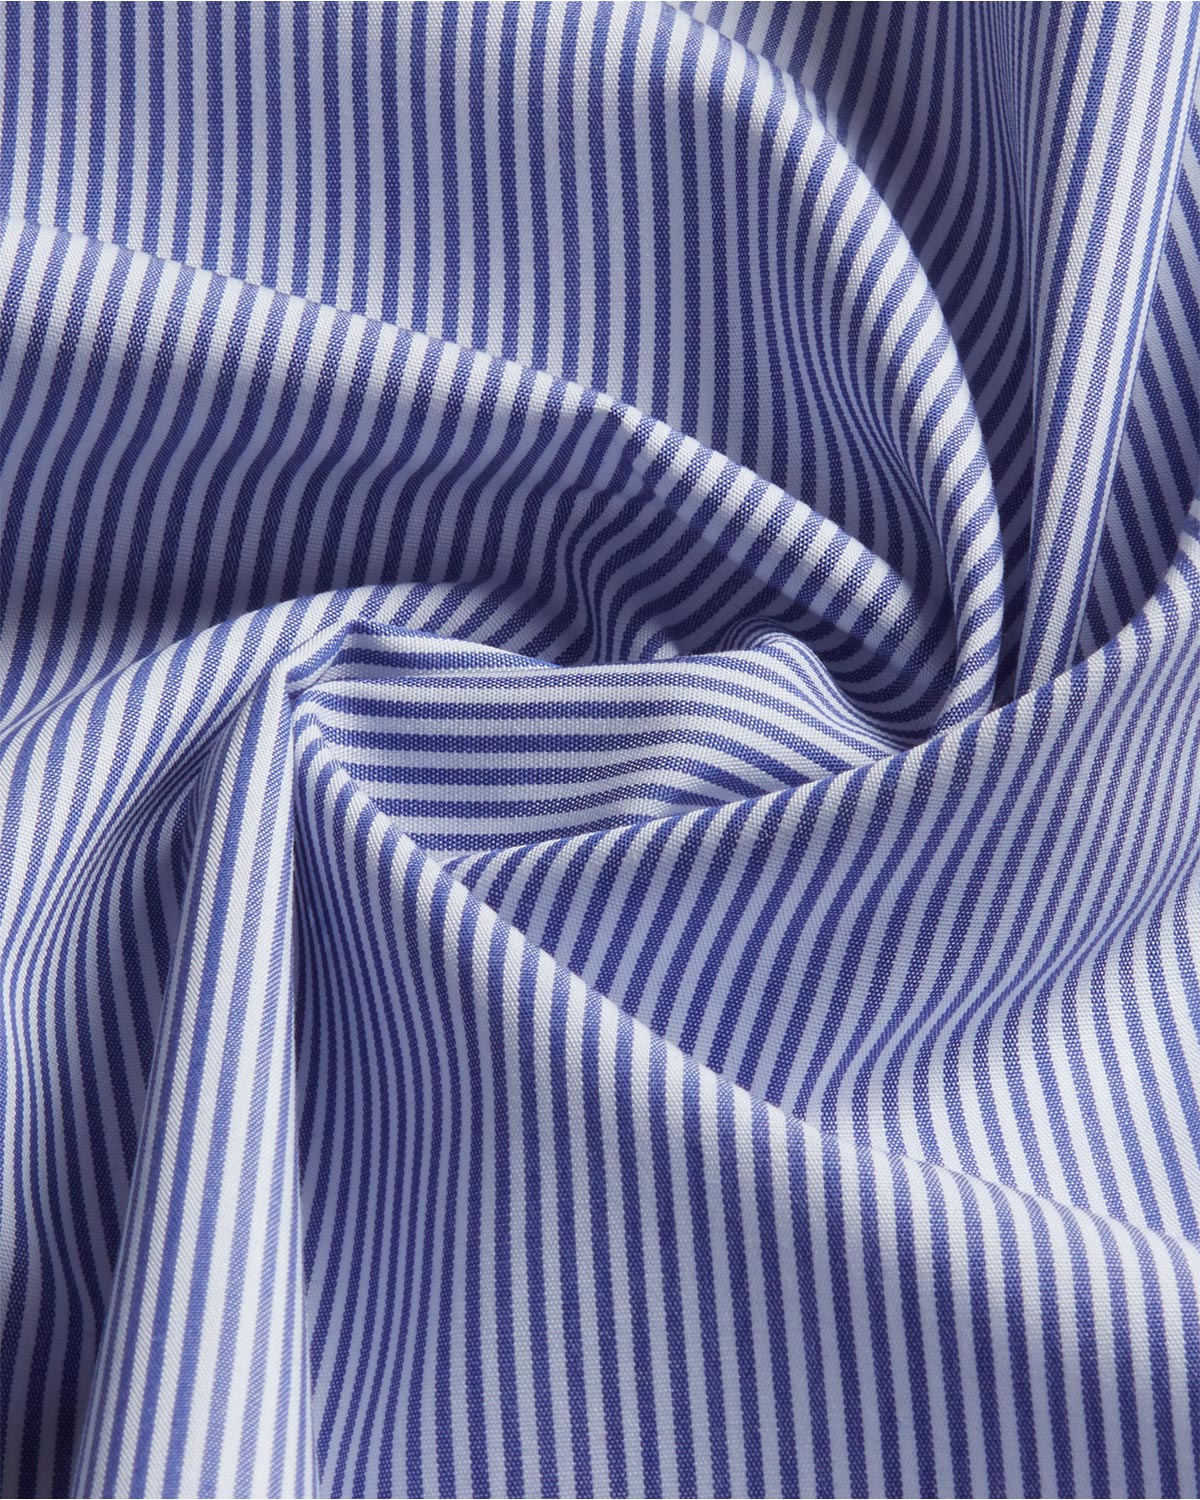 Bombay Shirt Company - Sea Ridge Striped Shirt